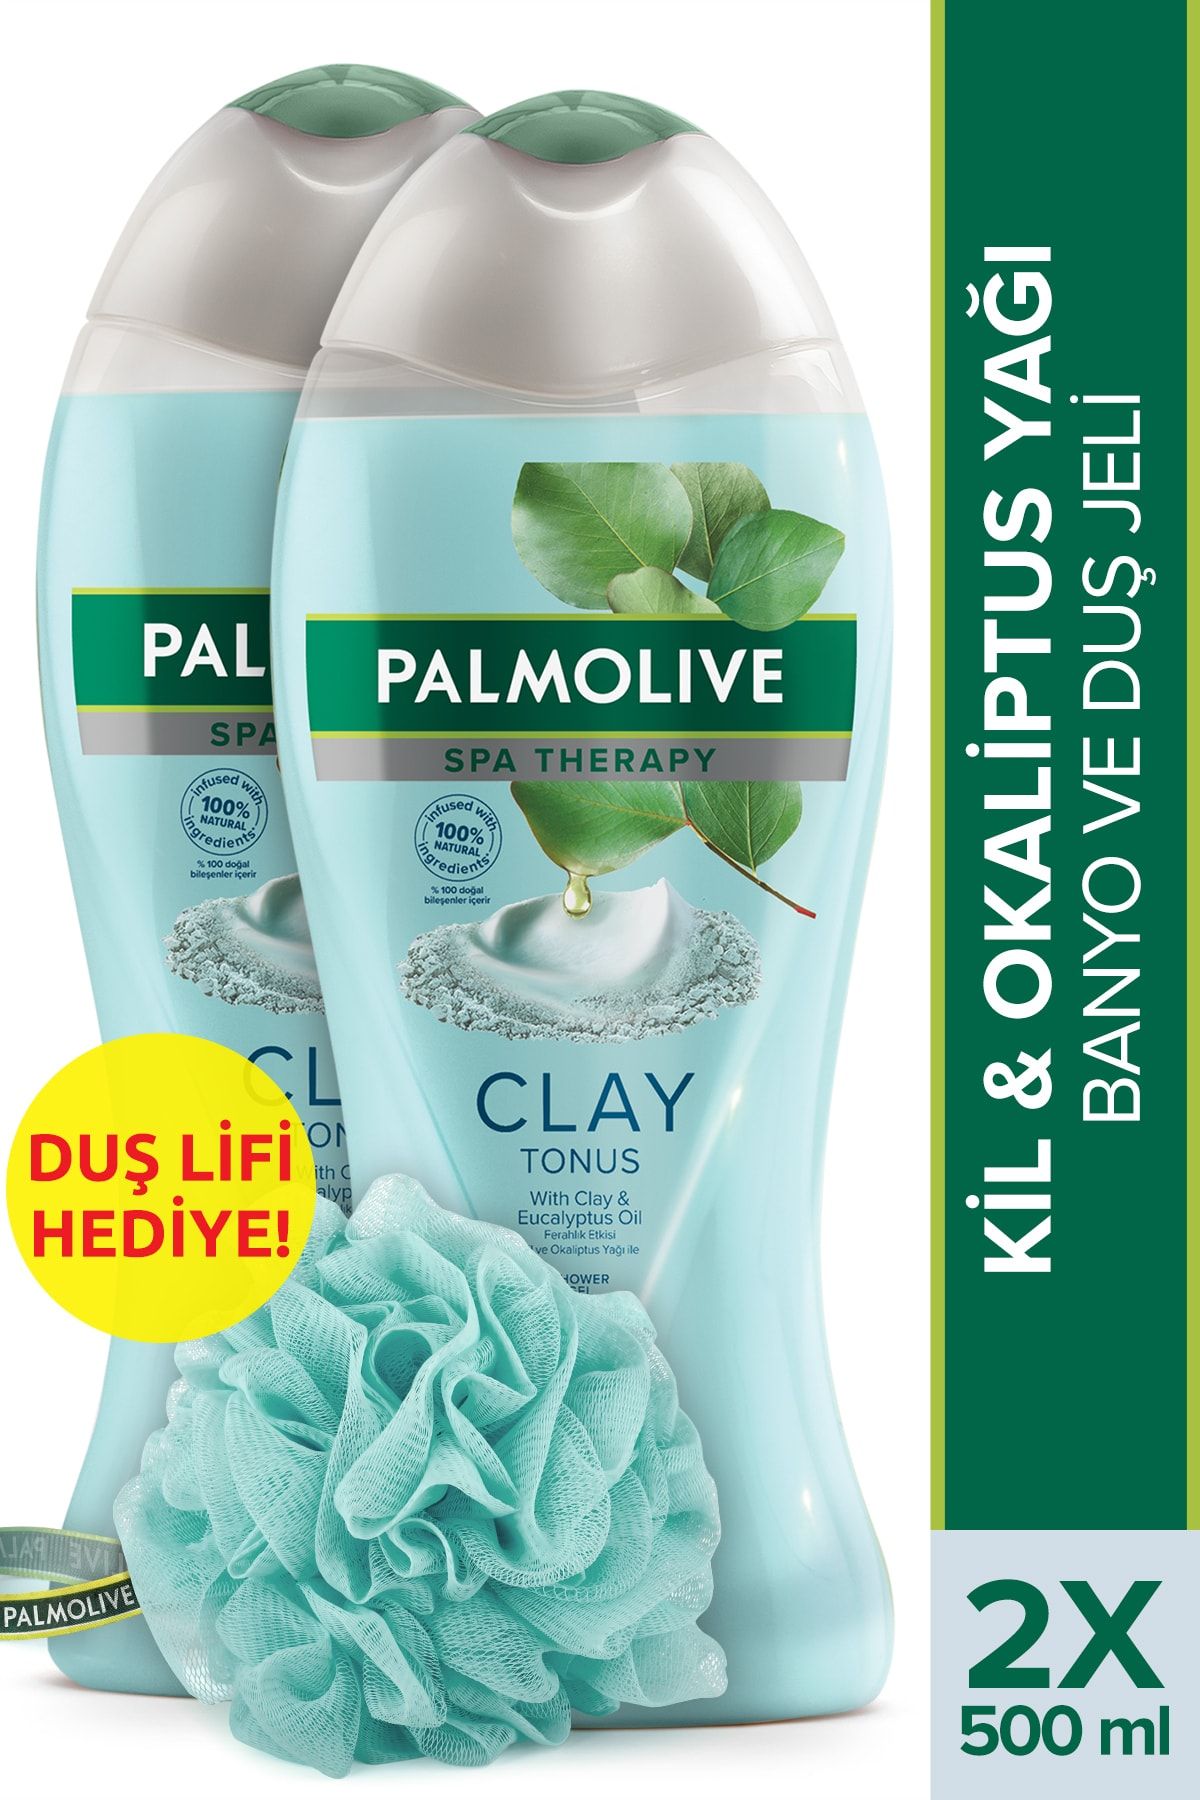 Palmolive Spa Therapy Clay Tonus Kil ve Okaliptus Yağı Banyo ve Duş Jeli 500 ml x 2 Adet + Duş Lifi